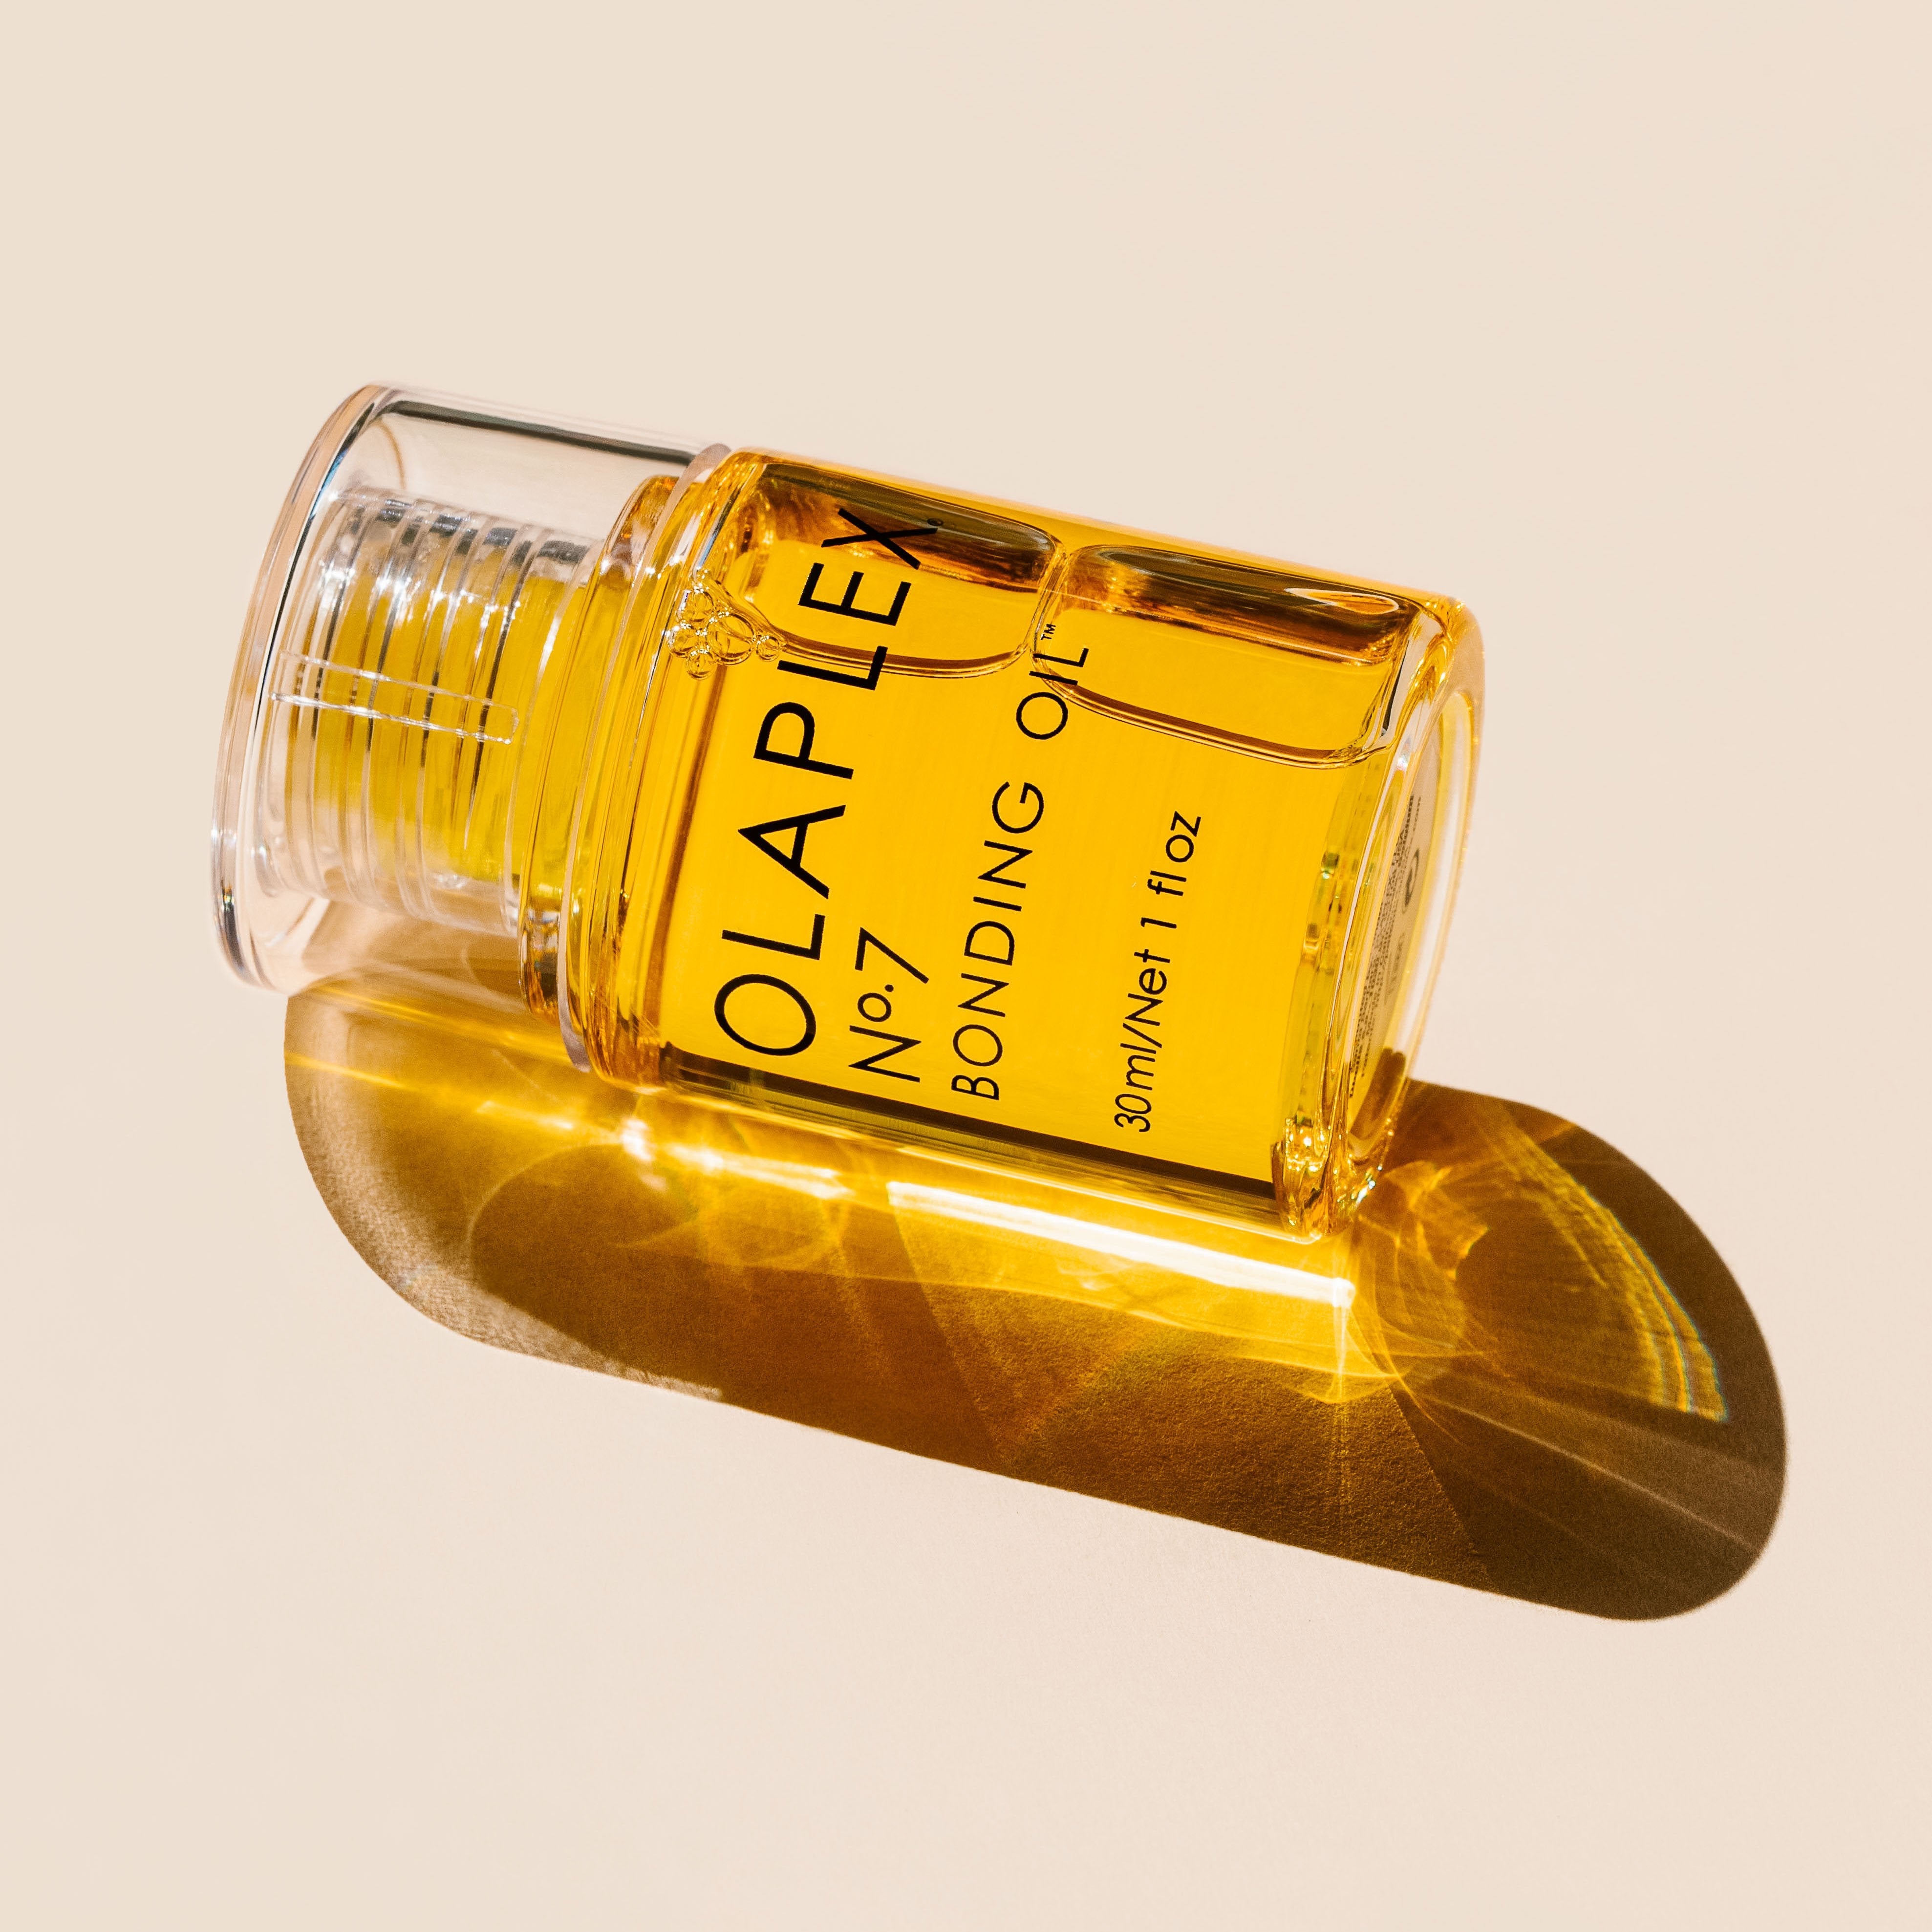 Olaplex No. 7 Bonding Oil (30 ml) Olaplex